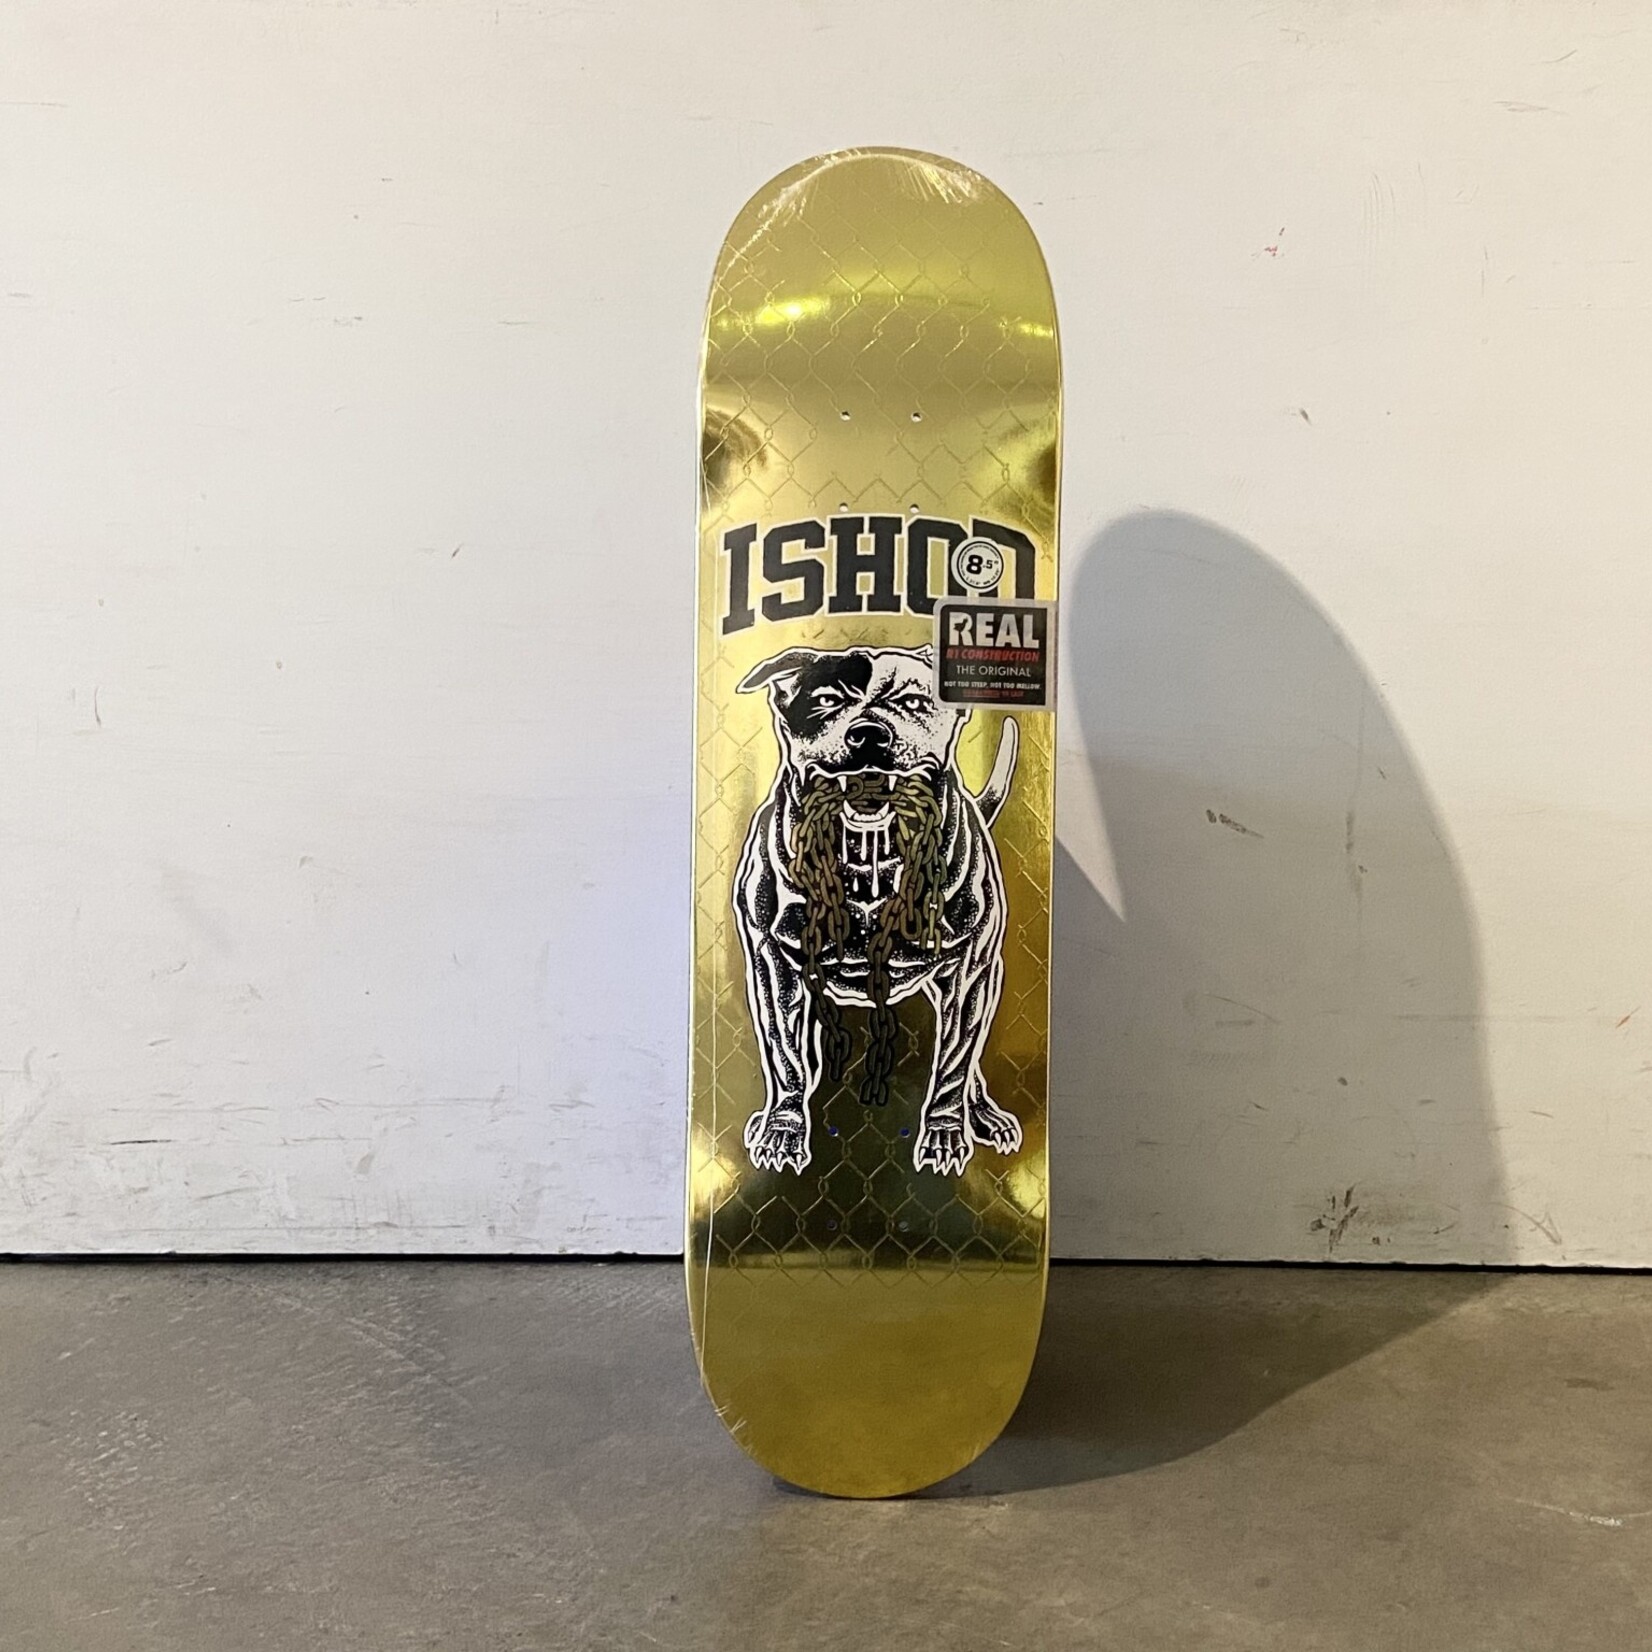 Real Real Skateboard 8.5 - Ishod Lucky Dog